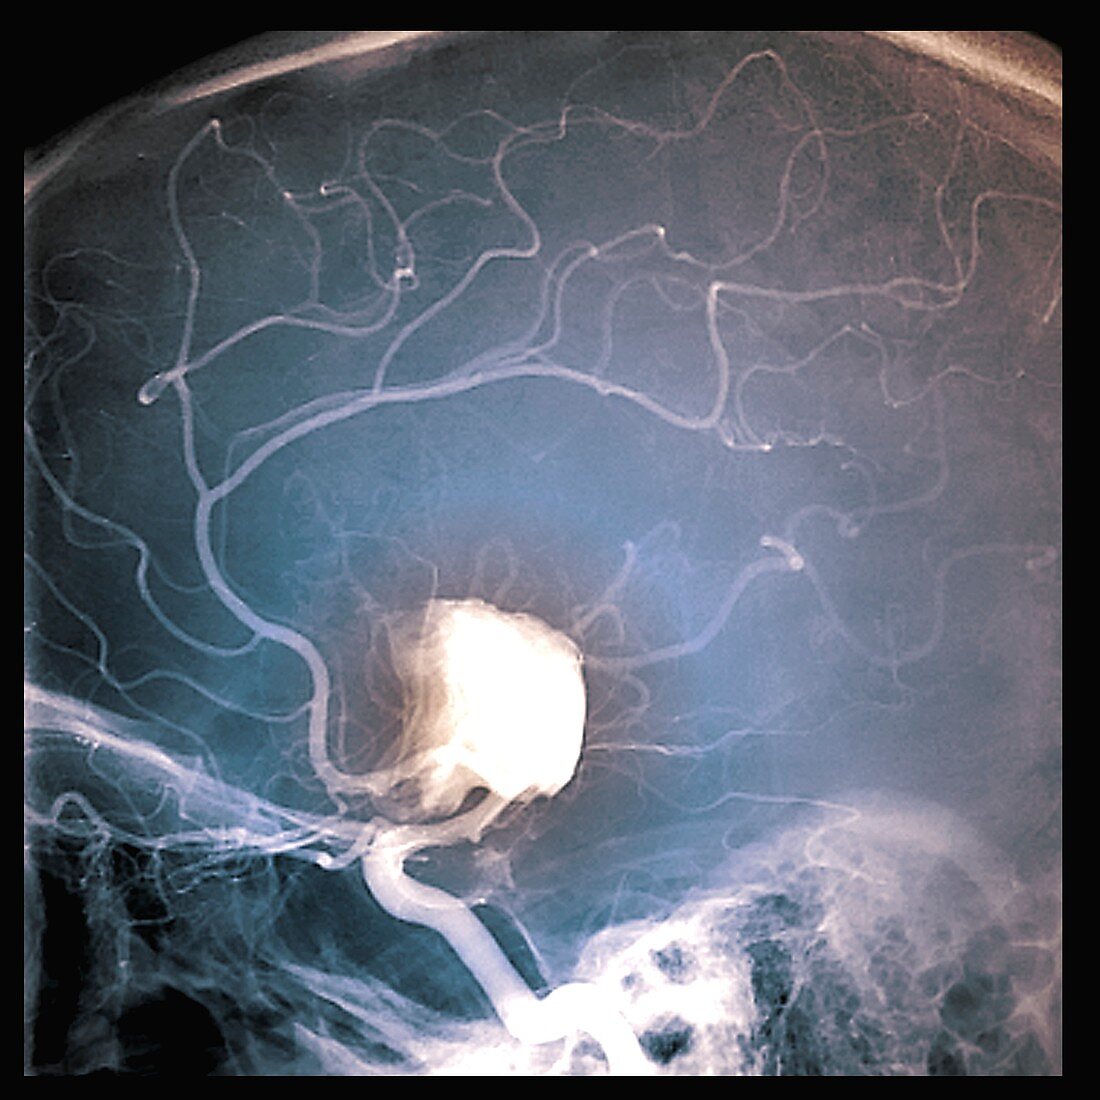 Cerebral aneurysm, angiogram